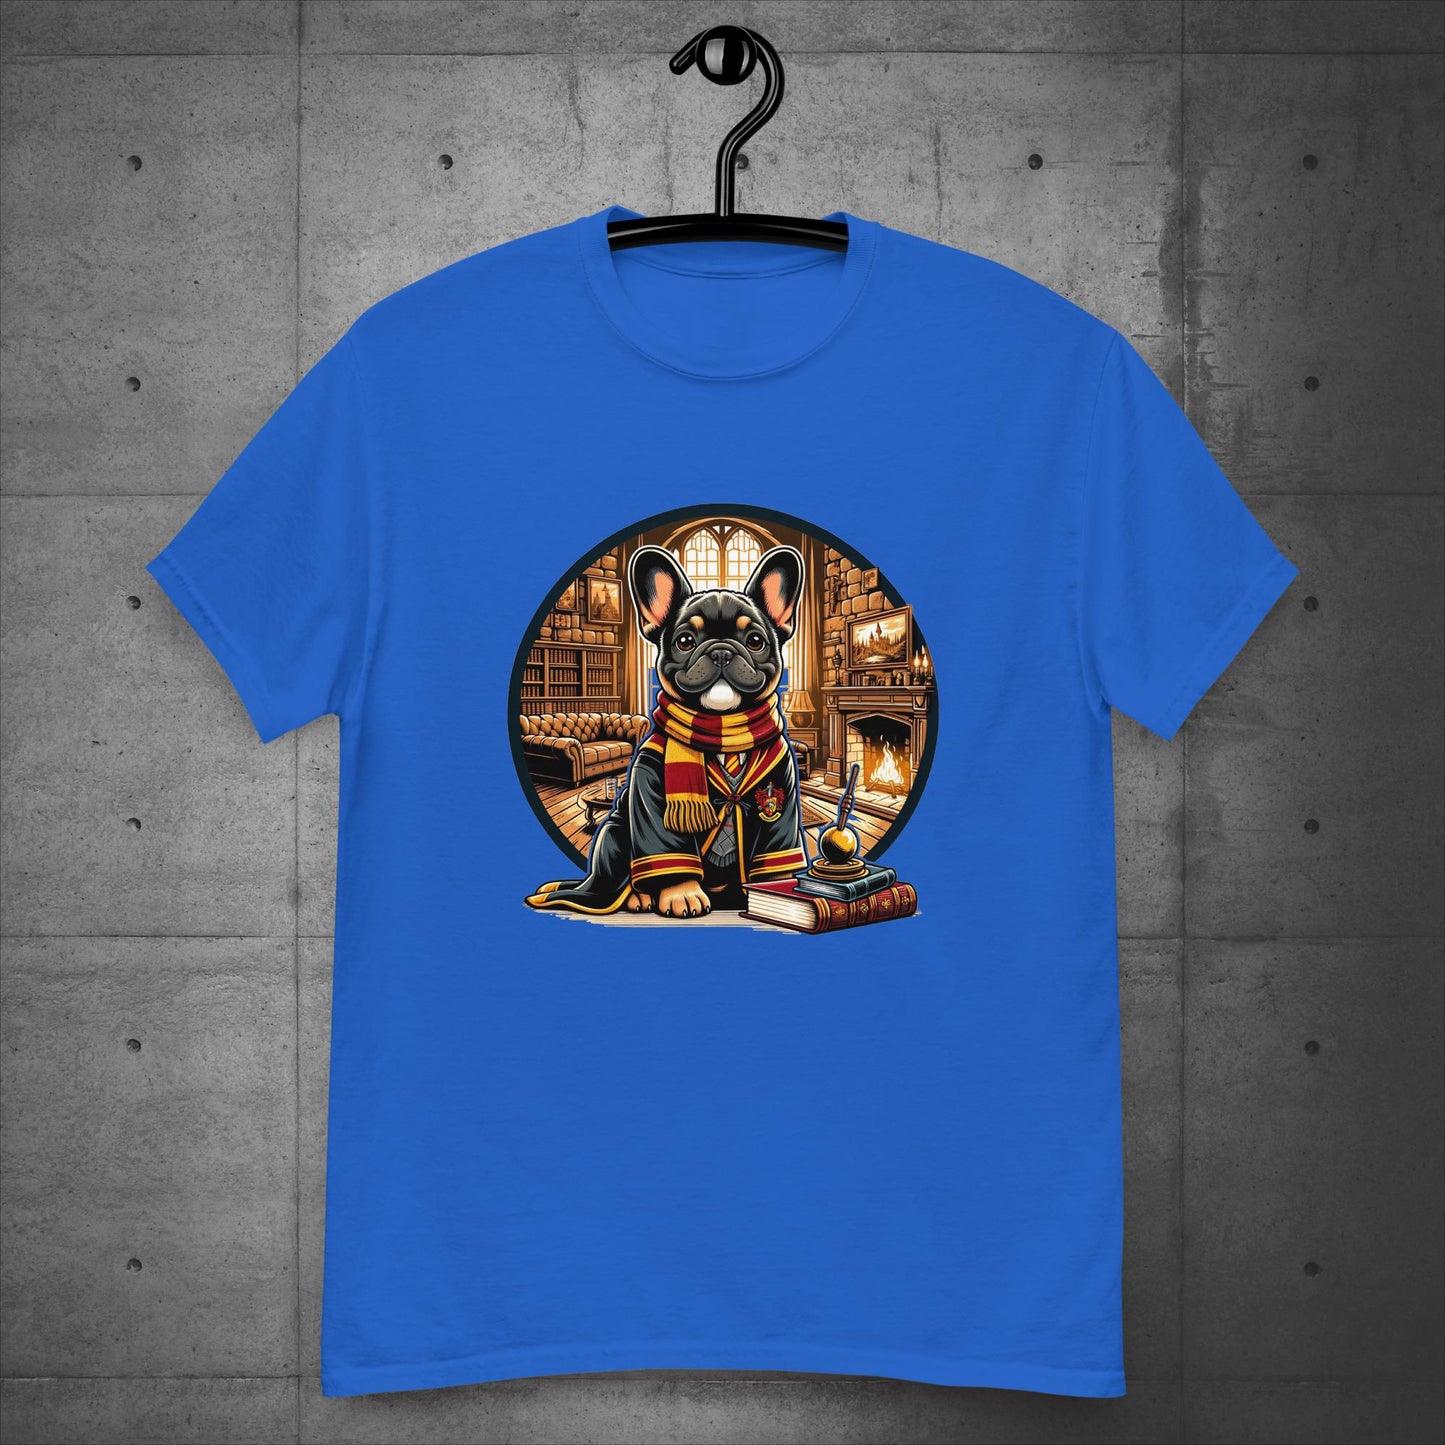 Unisex "Gryffindor Frenchie" T-Shirt